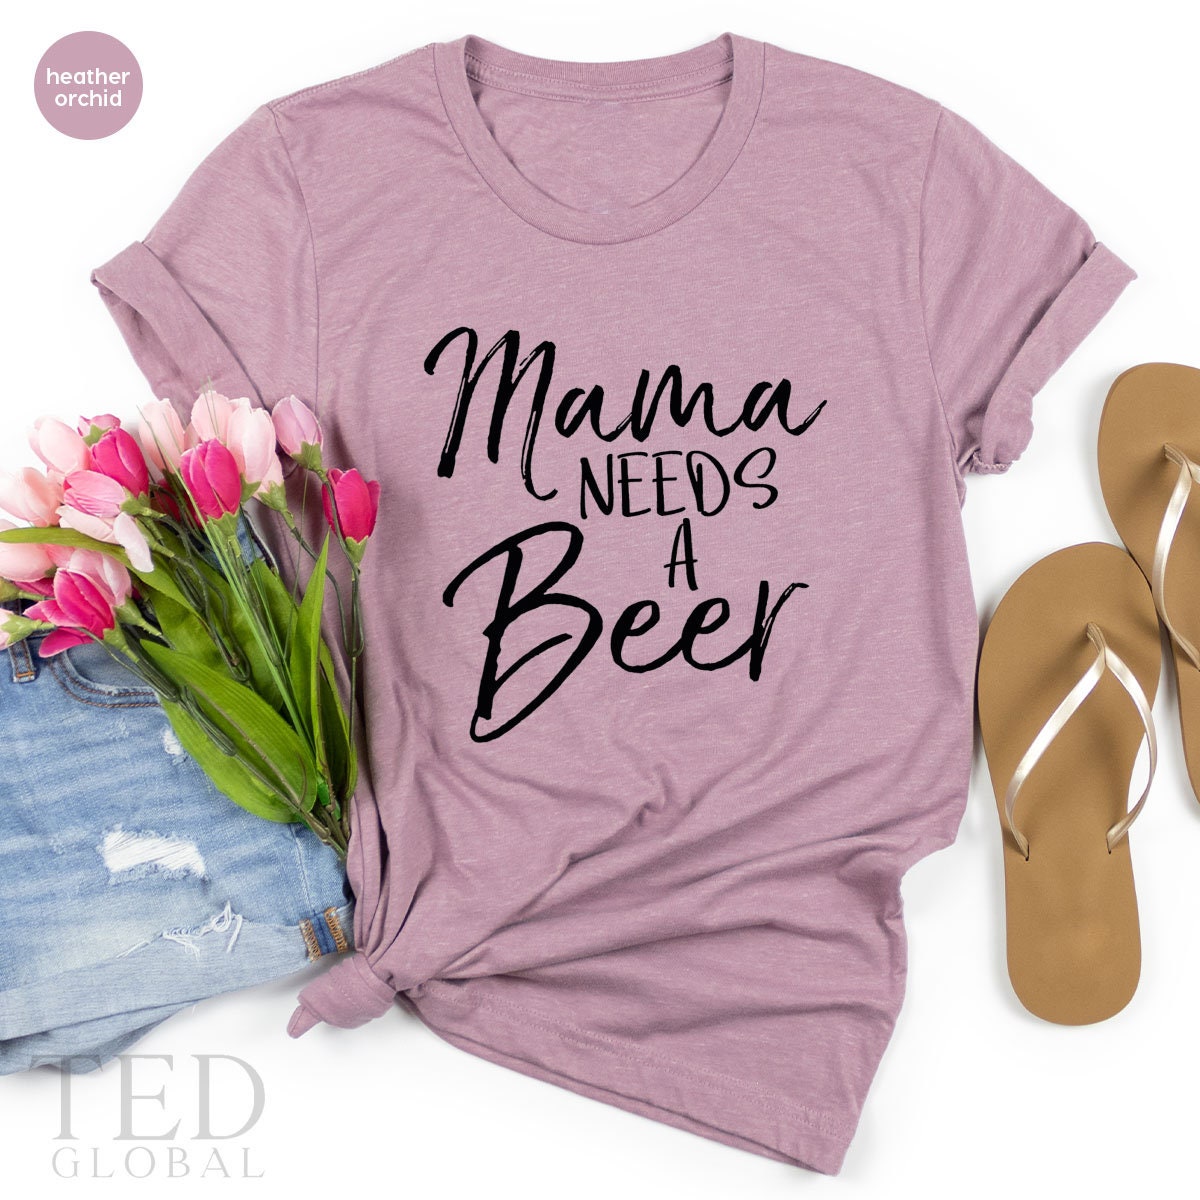 Bad Moms Club Provided Wine T Shirt, Wine Lover Mom Tshirt, New Mom Gifts